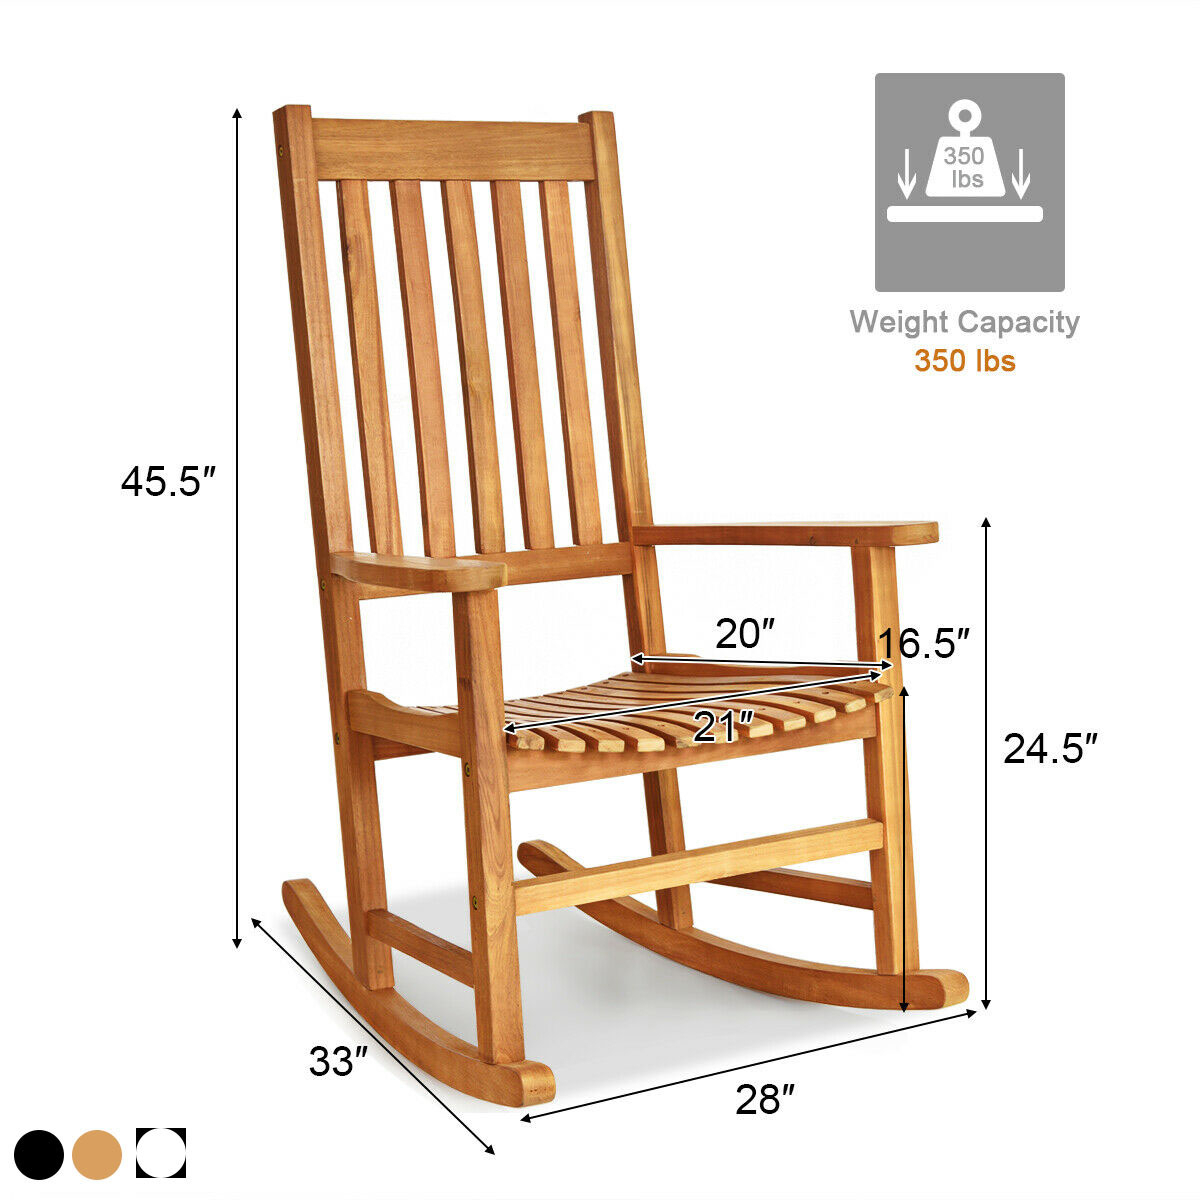 2PCS Wood Rocking Chair Porch Rocker High Back Garden Seat Indoor Outdoor - White